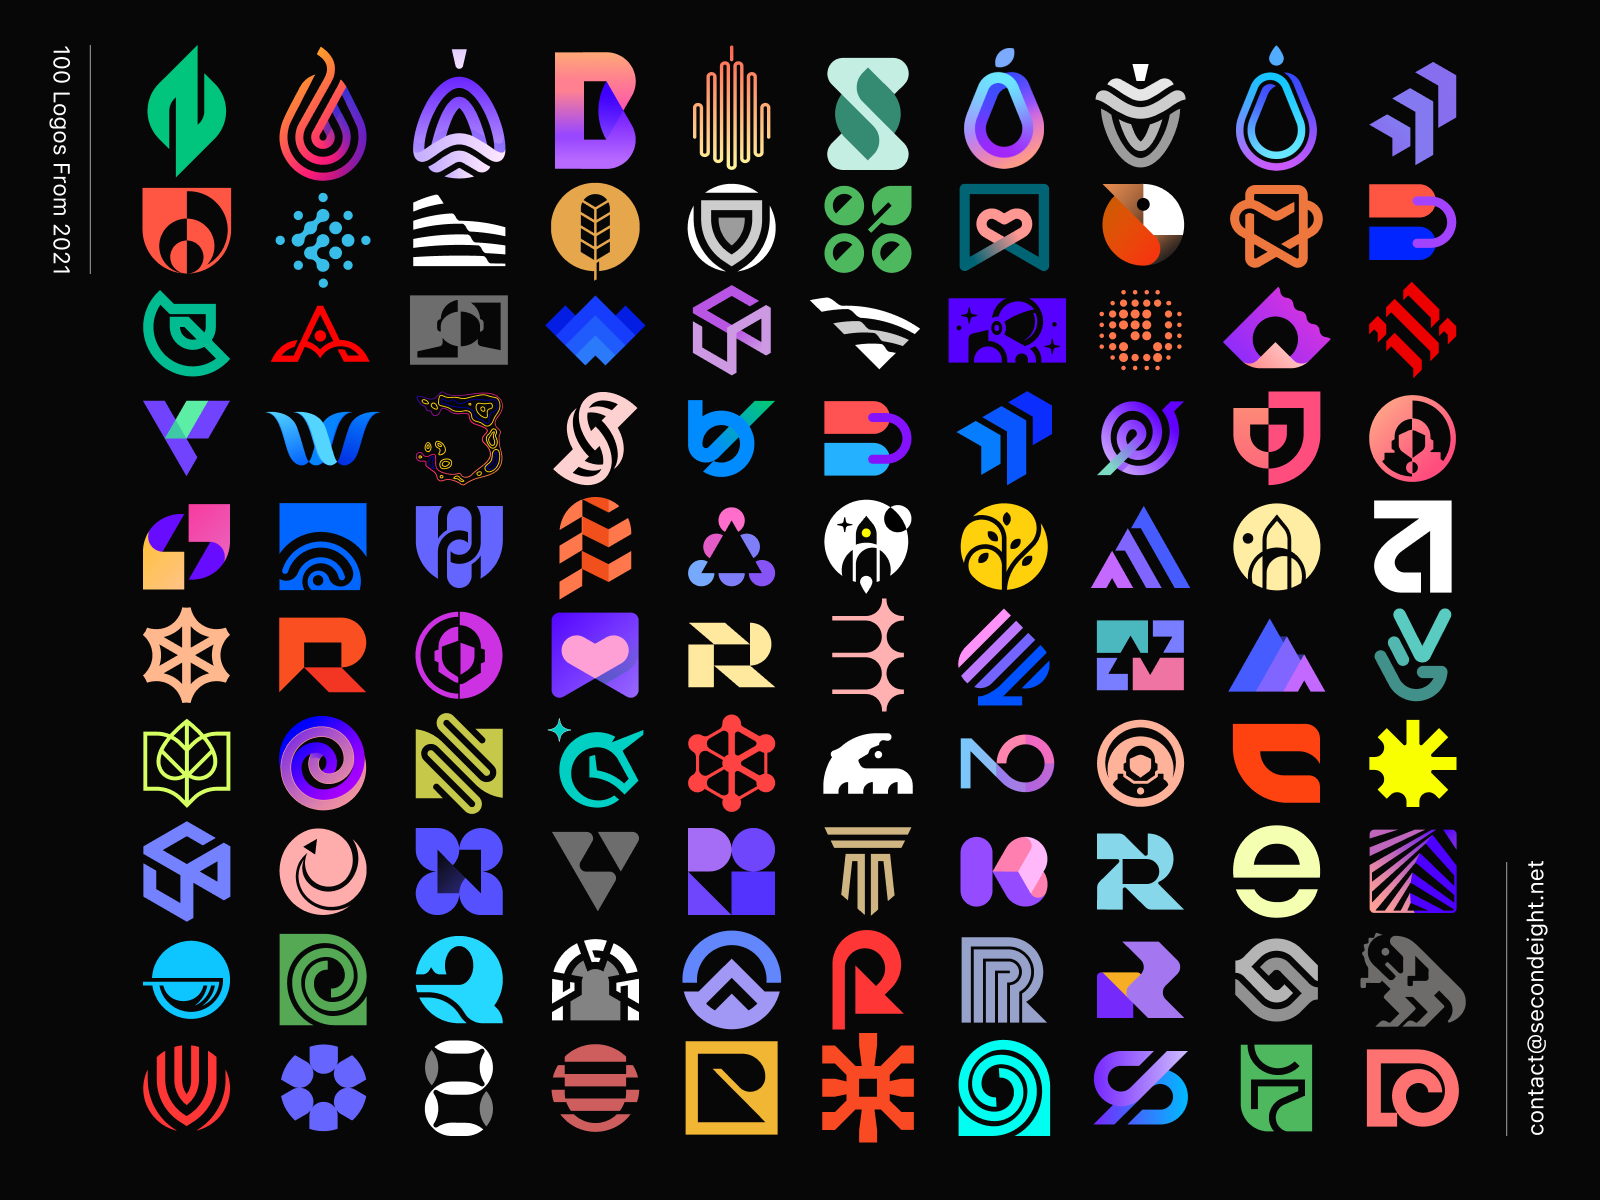 100 Logos from 2021